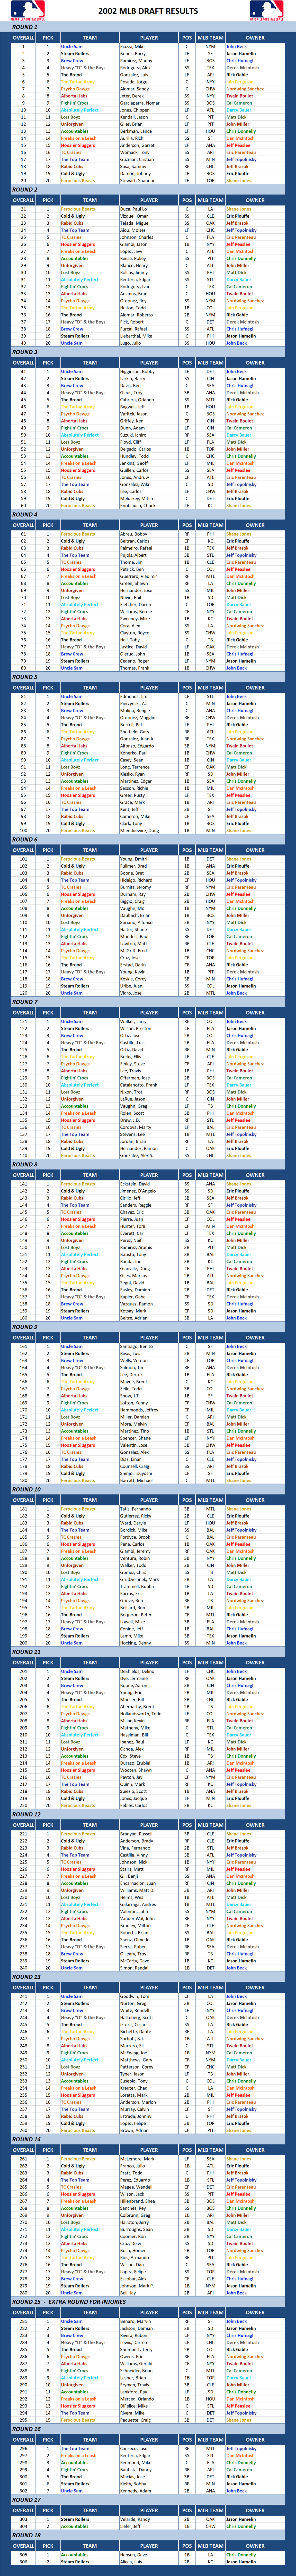 2002 Major league Baseball Draft Results